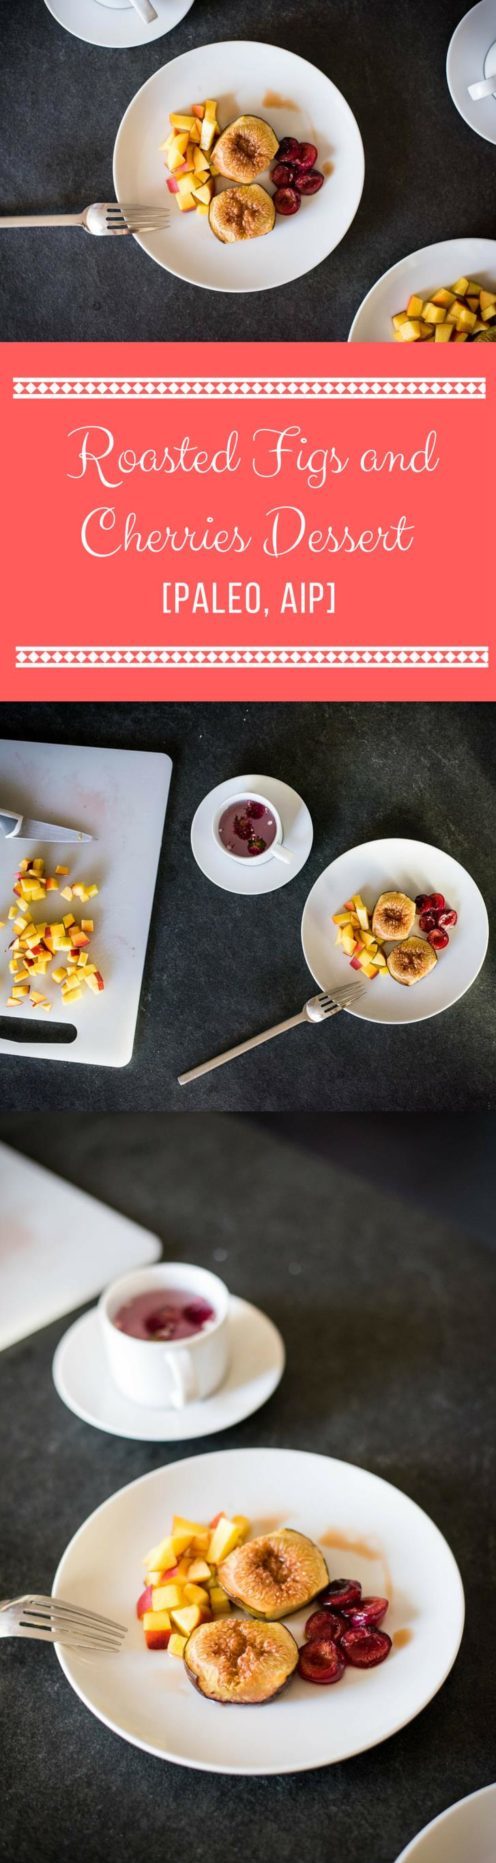 Roasted Figs and Cherries Dessert Recipe - #paleo #recipe #aip https://paleoflourish.com/roasted-figs-cherries-dessert-recipe-paleo-aip